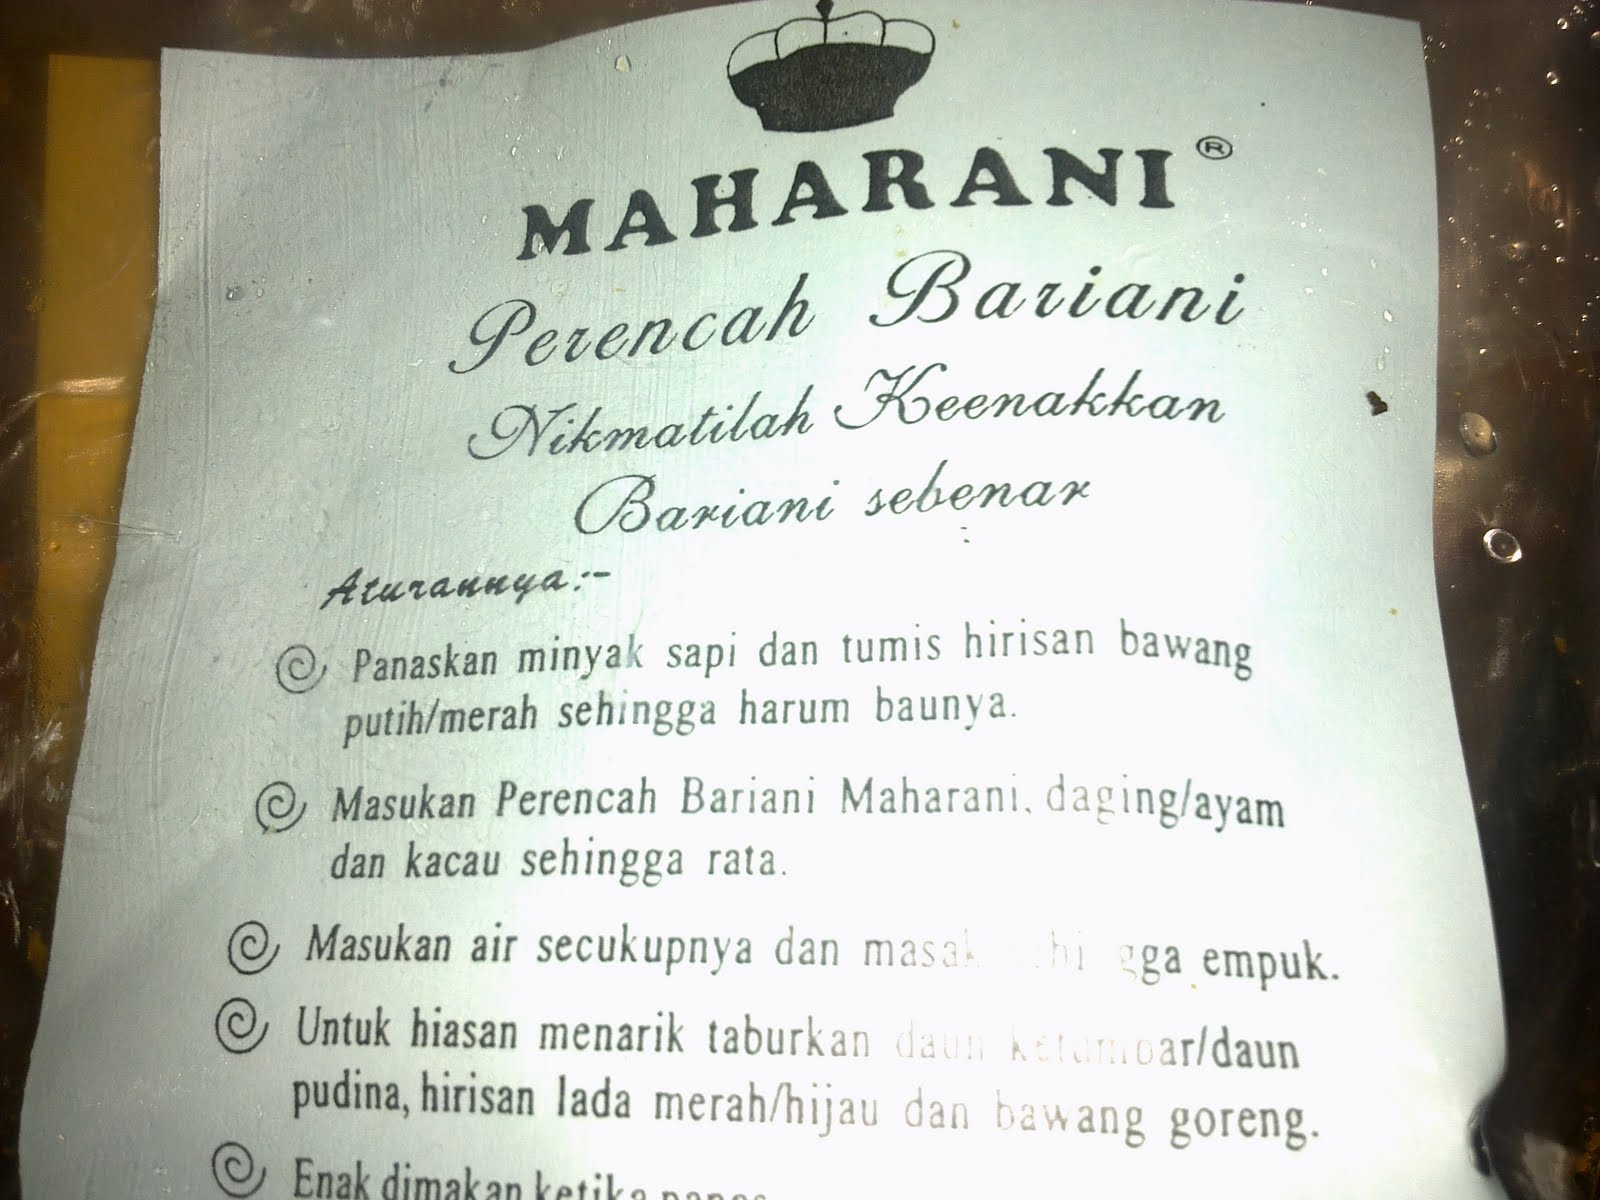 Mee Bandung Maharani: Mee Bandung Maharani